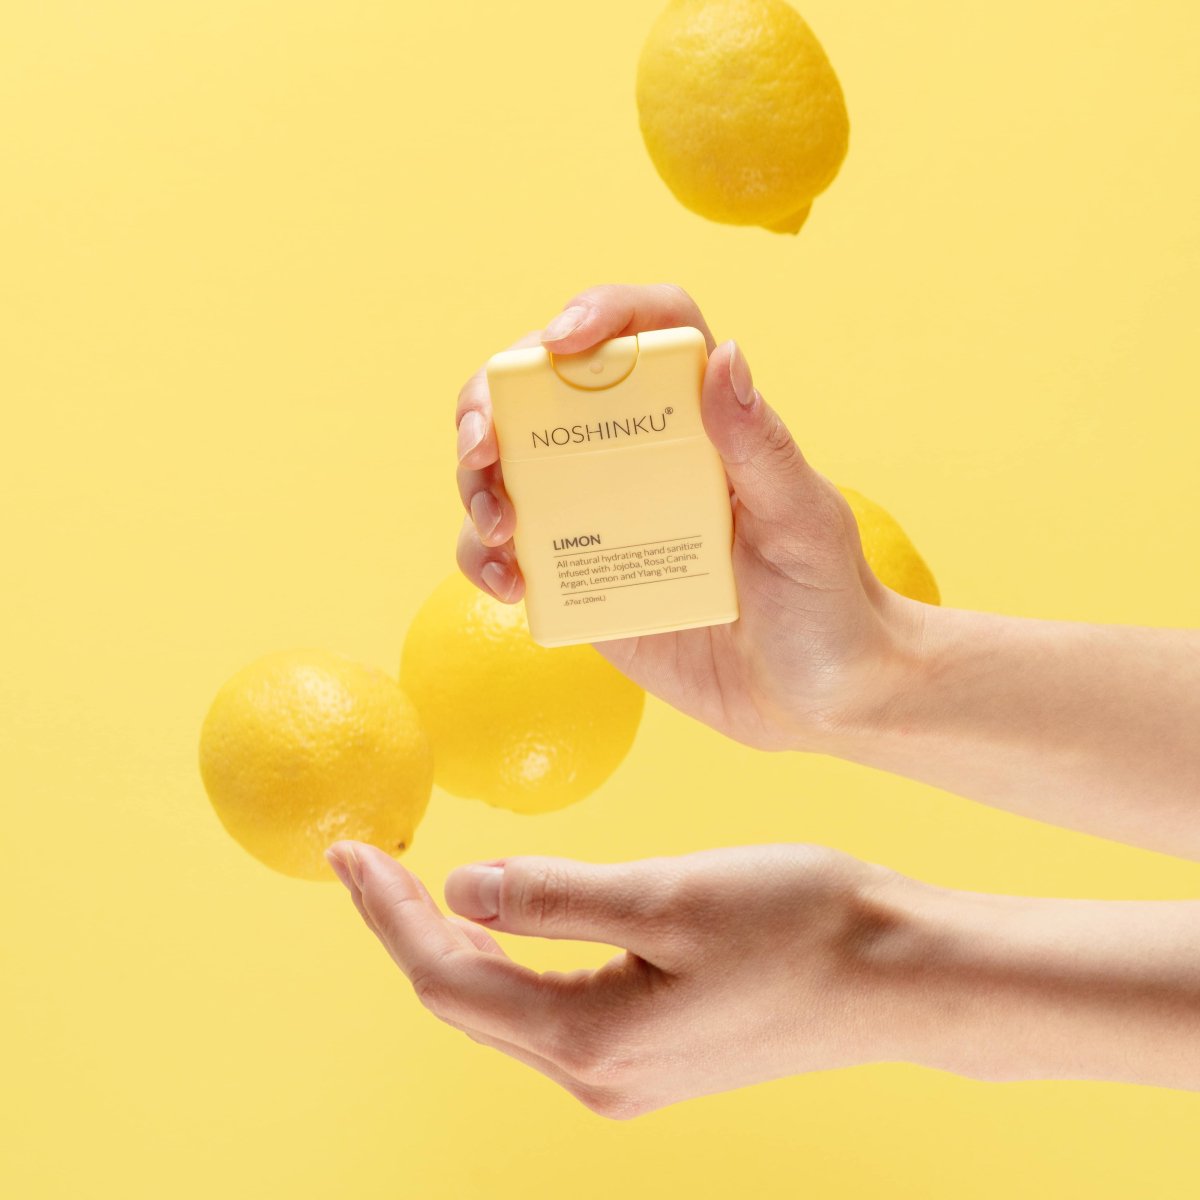 Noshinku Limon Refillable Pocket Sanitizer - lily & onyx